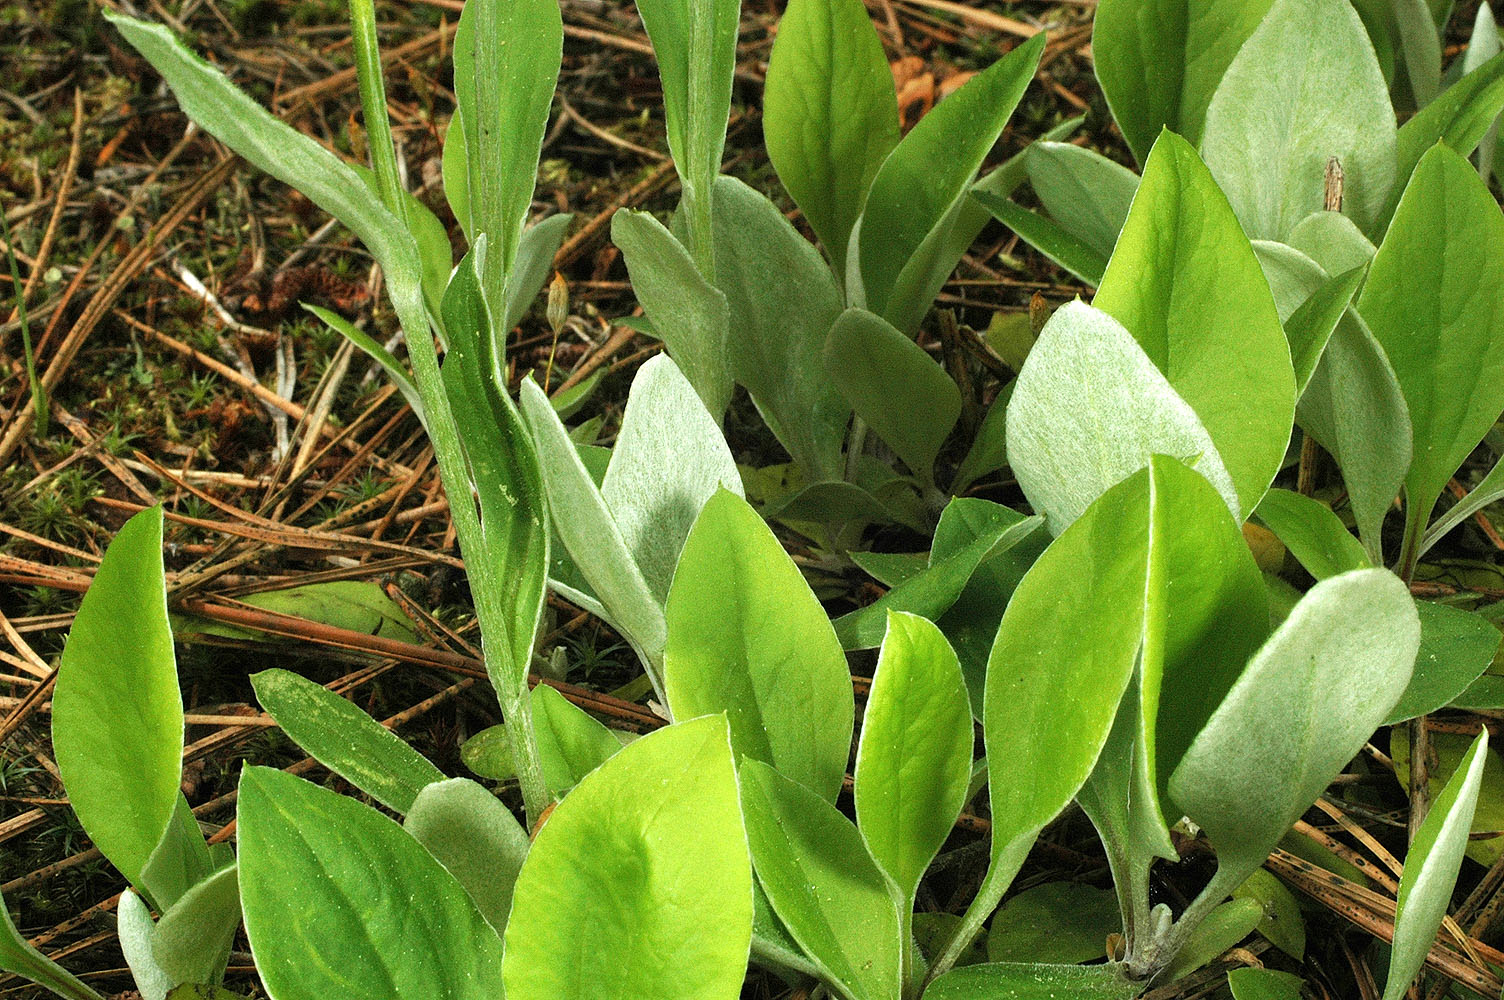 Flora of Eastern Washington Image: Antennaria racemosa